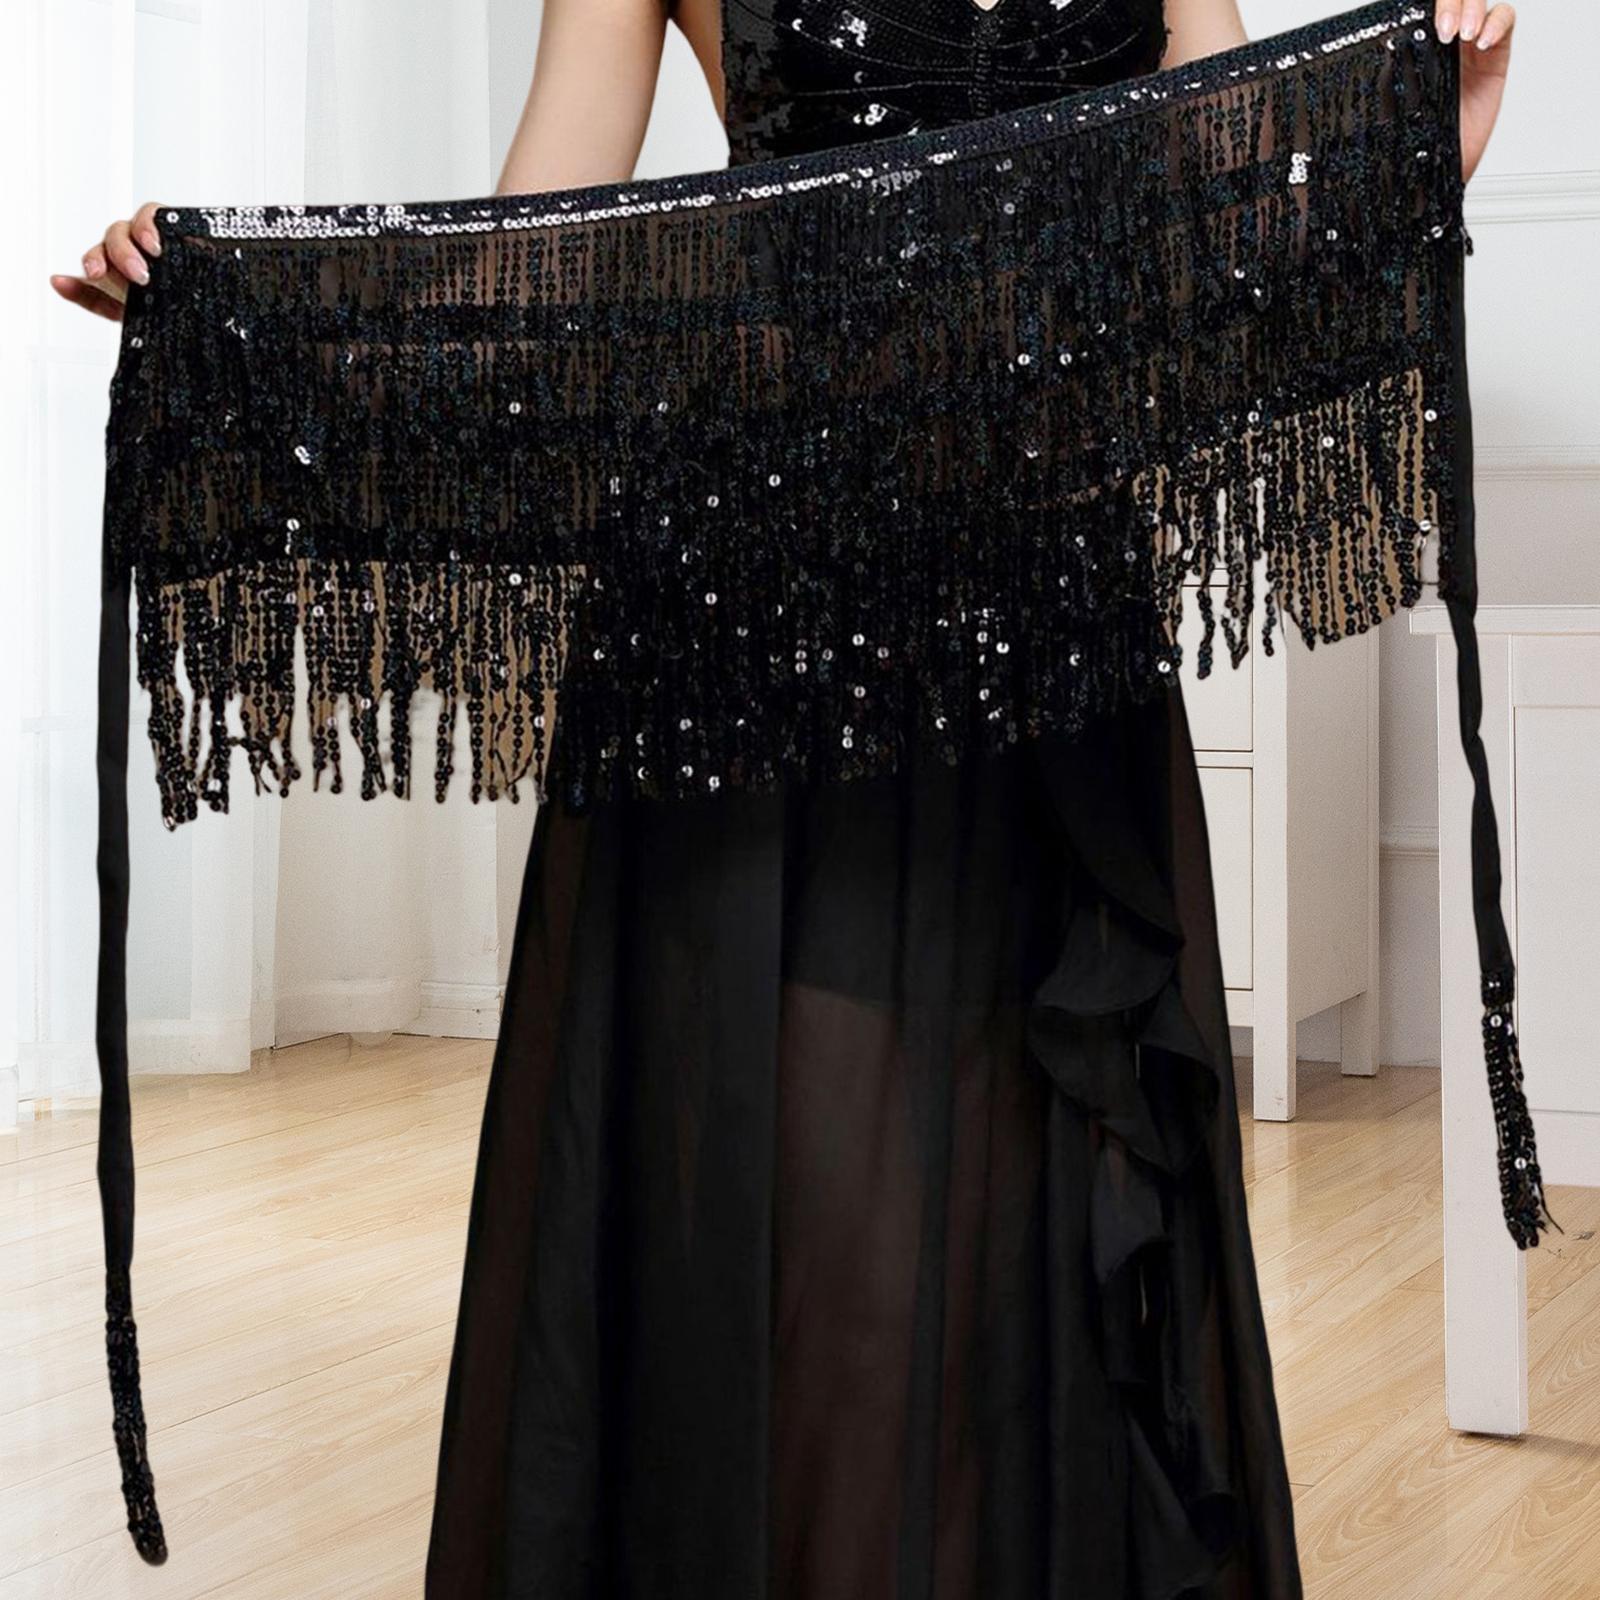 Belly Dance Skirt Belt Sequined Tassel Costume for Performance Party Rave